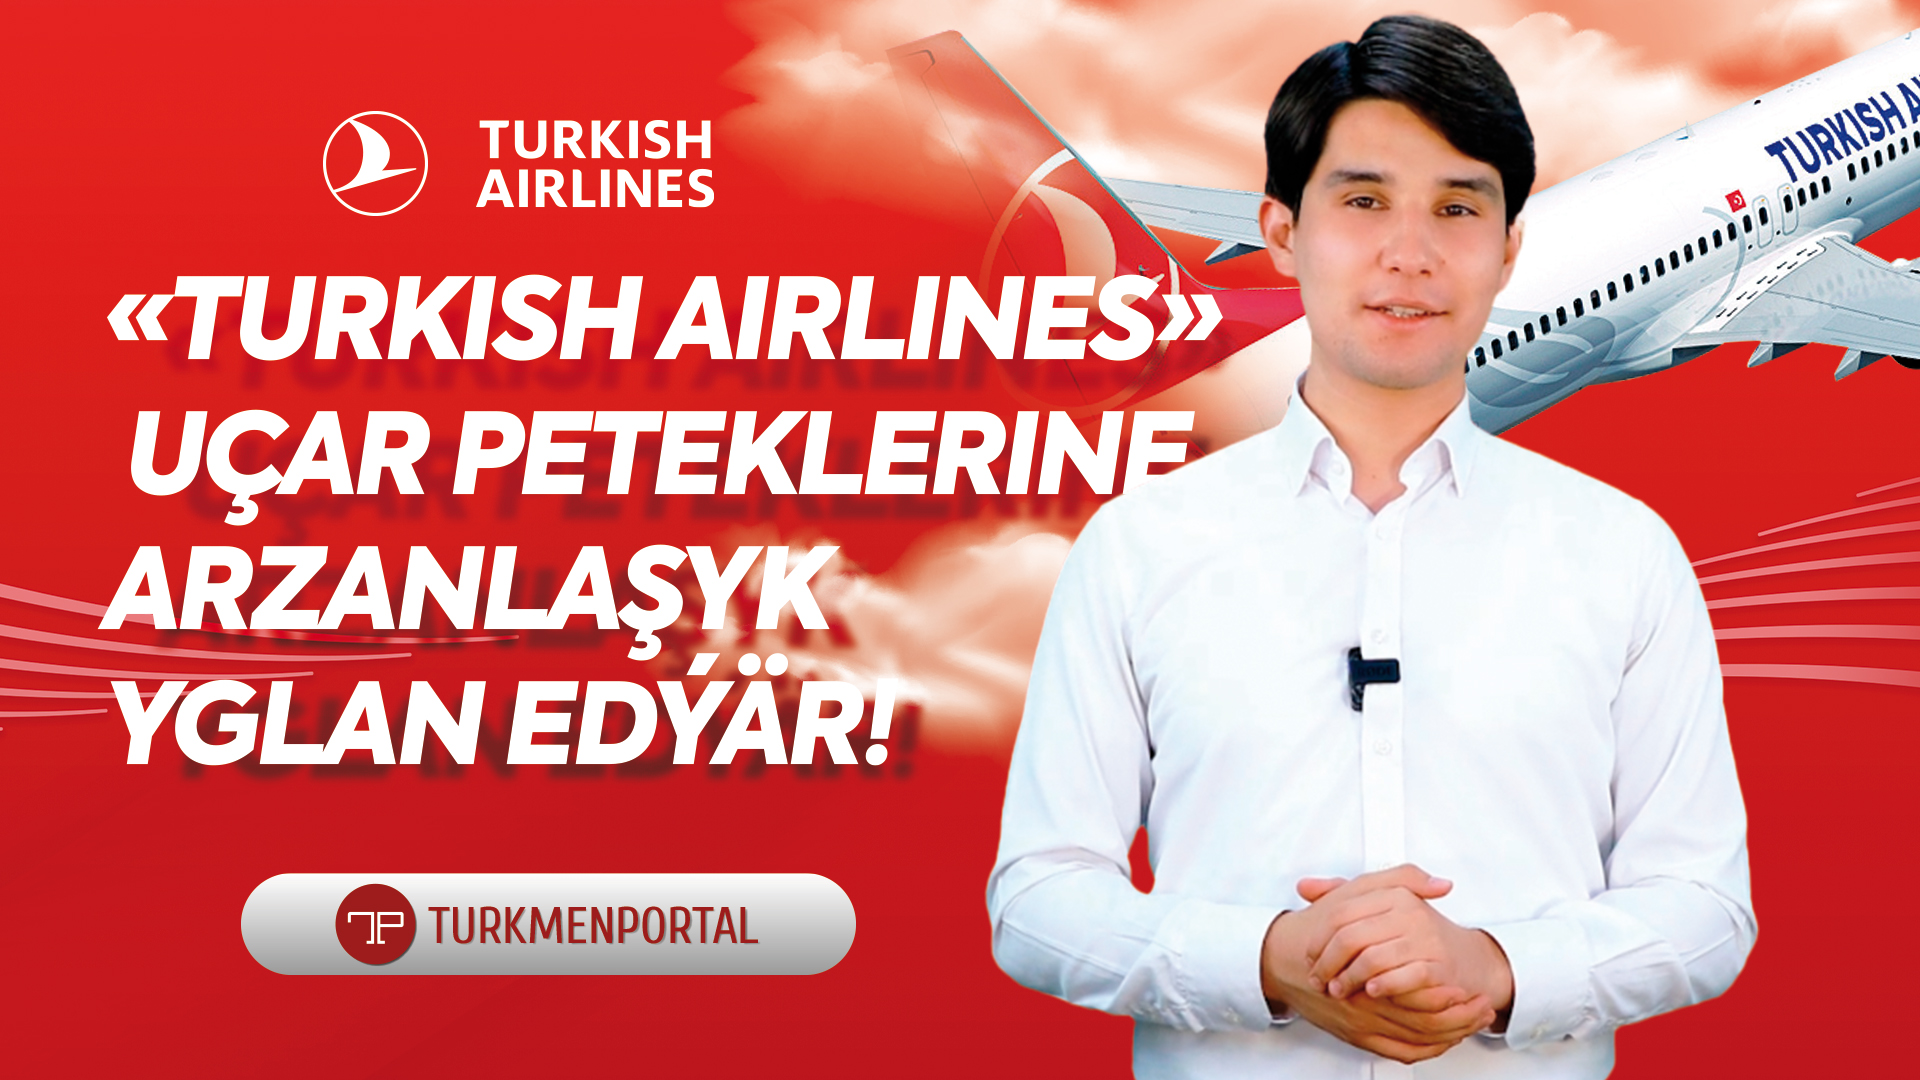 
“Turkish Airlines” uçar peteklerine arzanlaşyk yglan edýär 